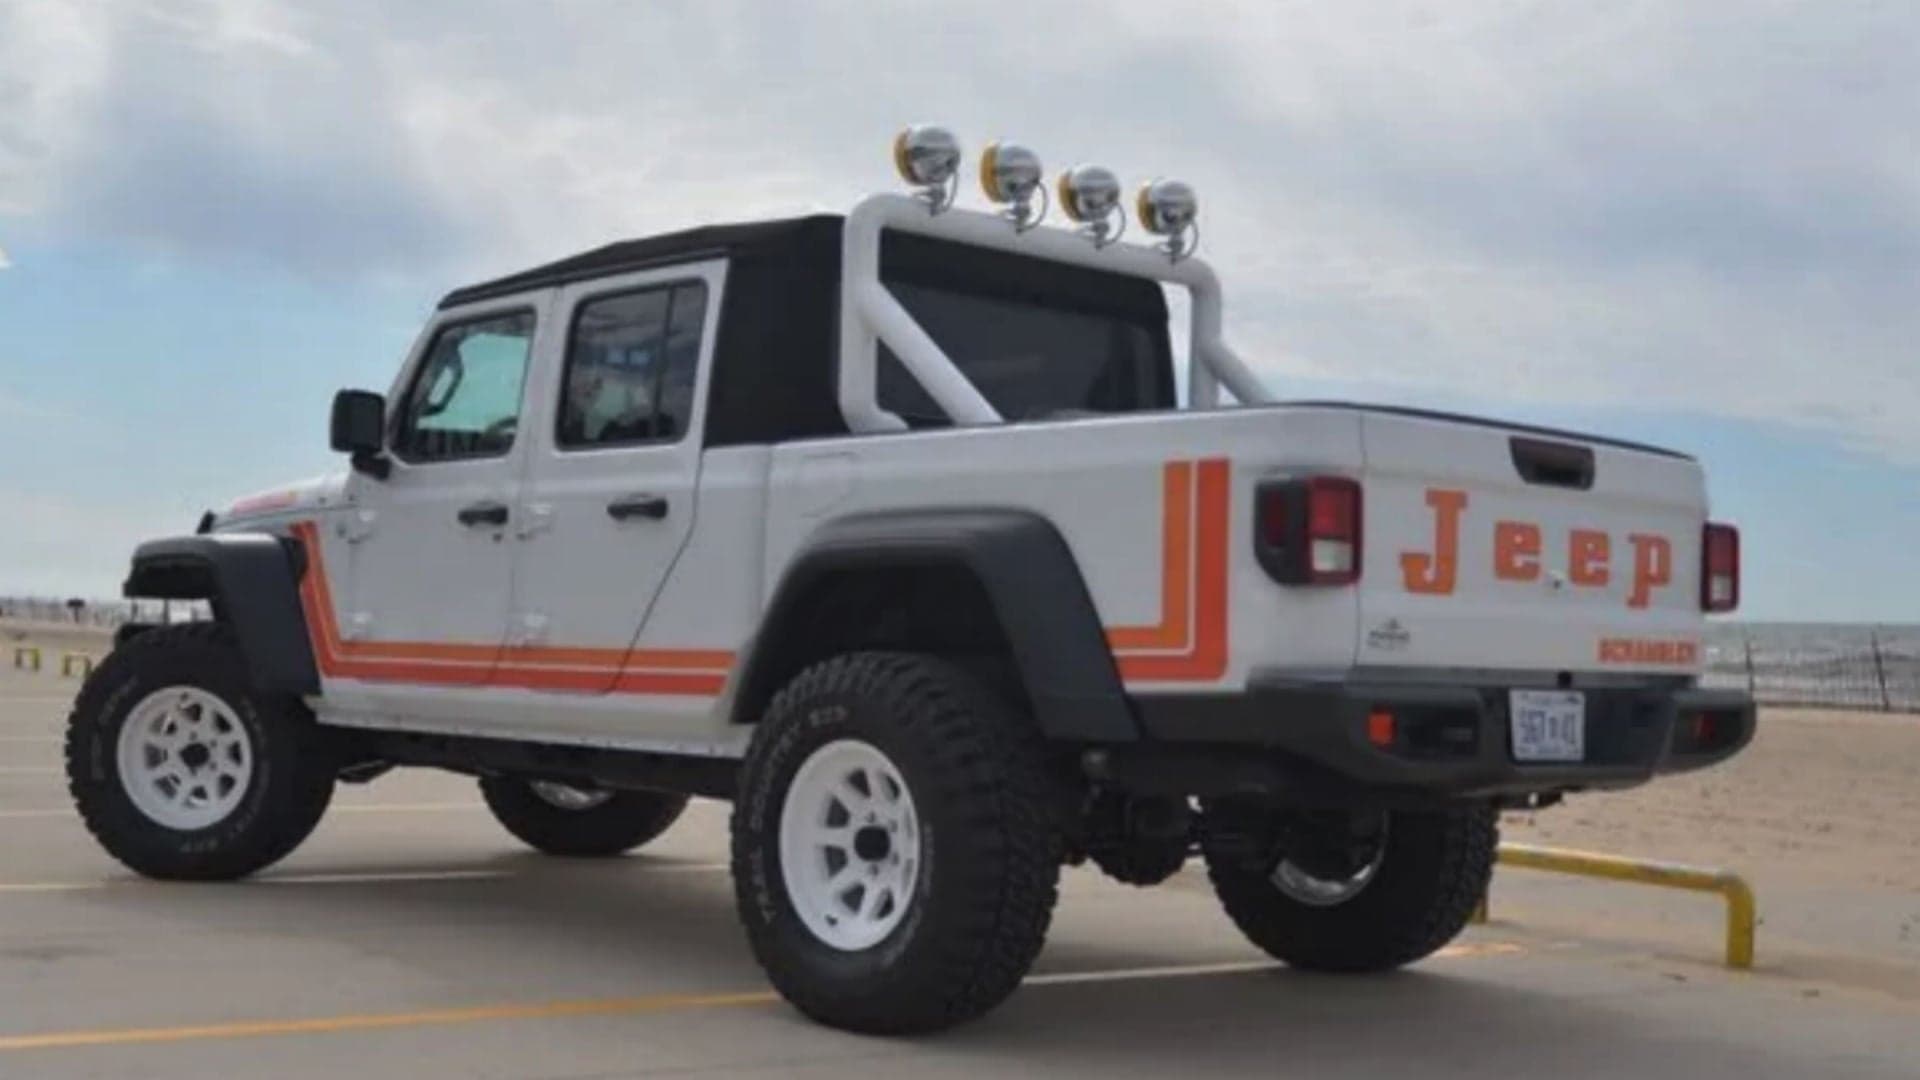 2020 Jeep Gladiator Turned Into Rad CJ-8 Scrambler Tribute by Michigan Dealer